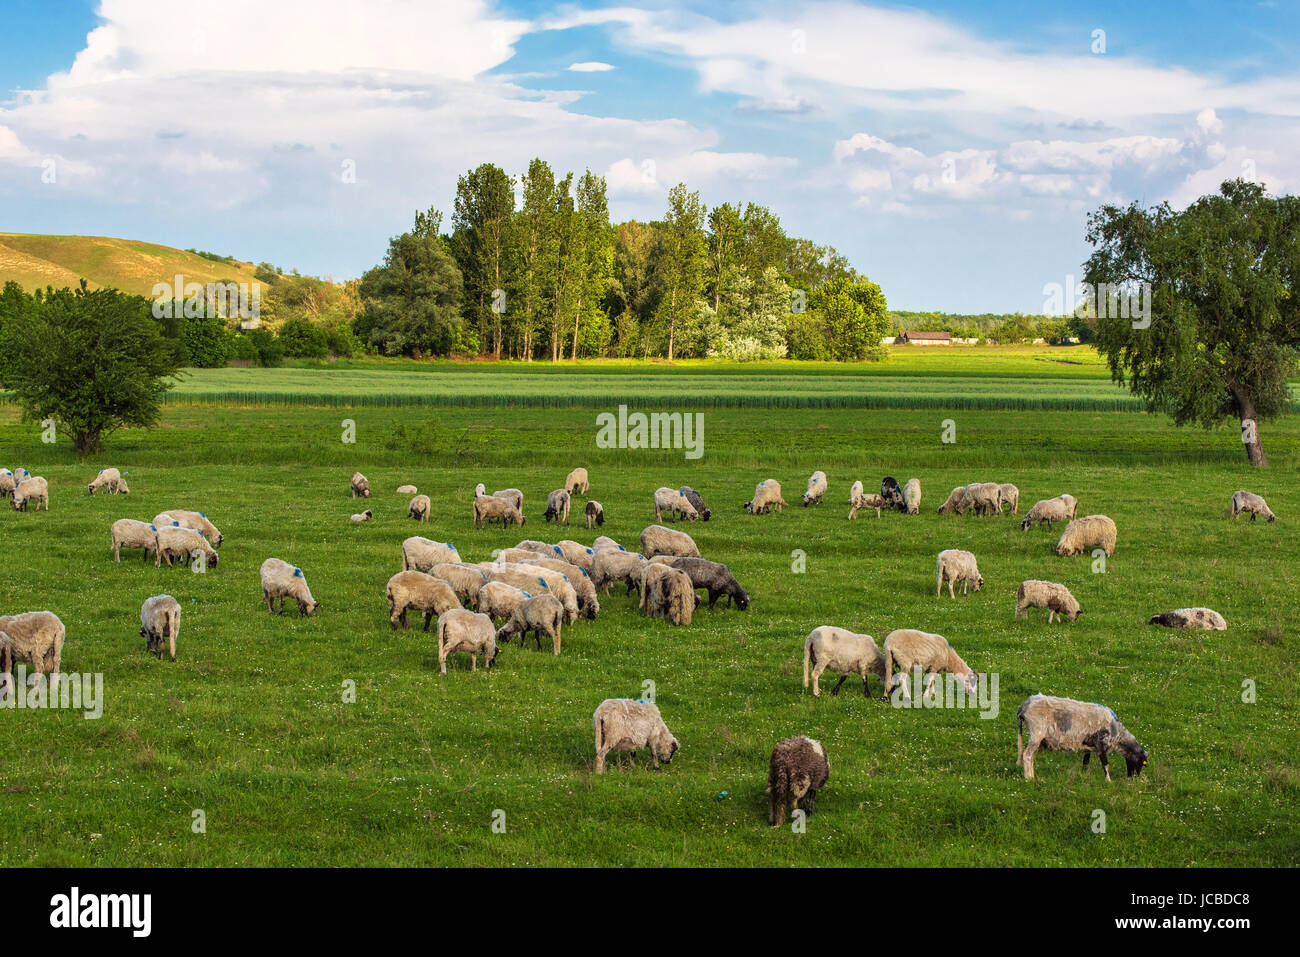 Herd of sheep on pasture, dairy farm animals grazing Stock Photo